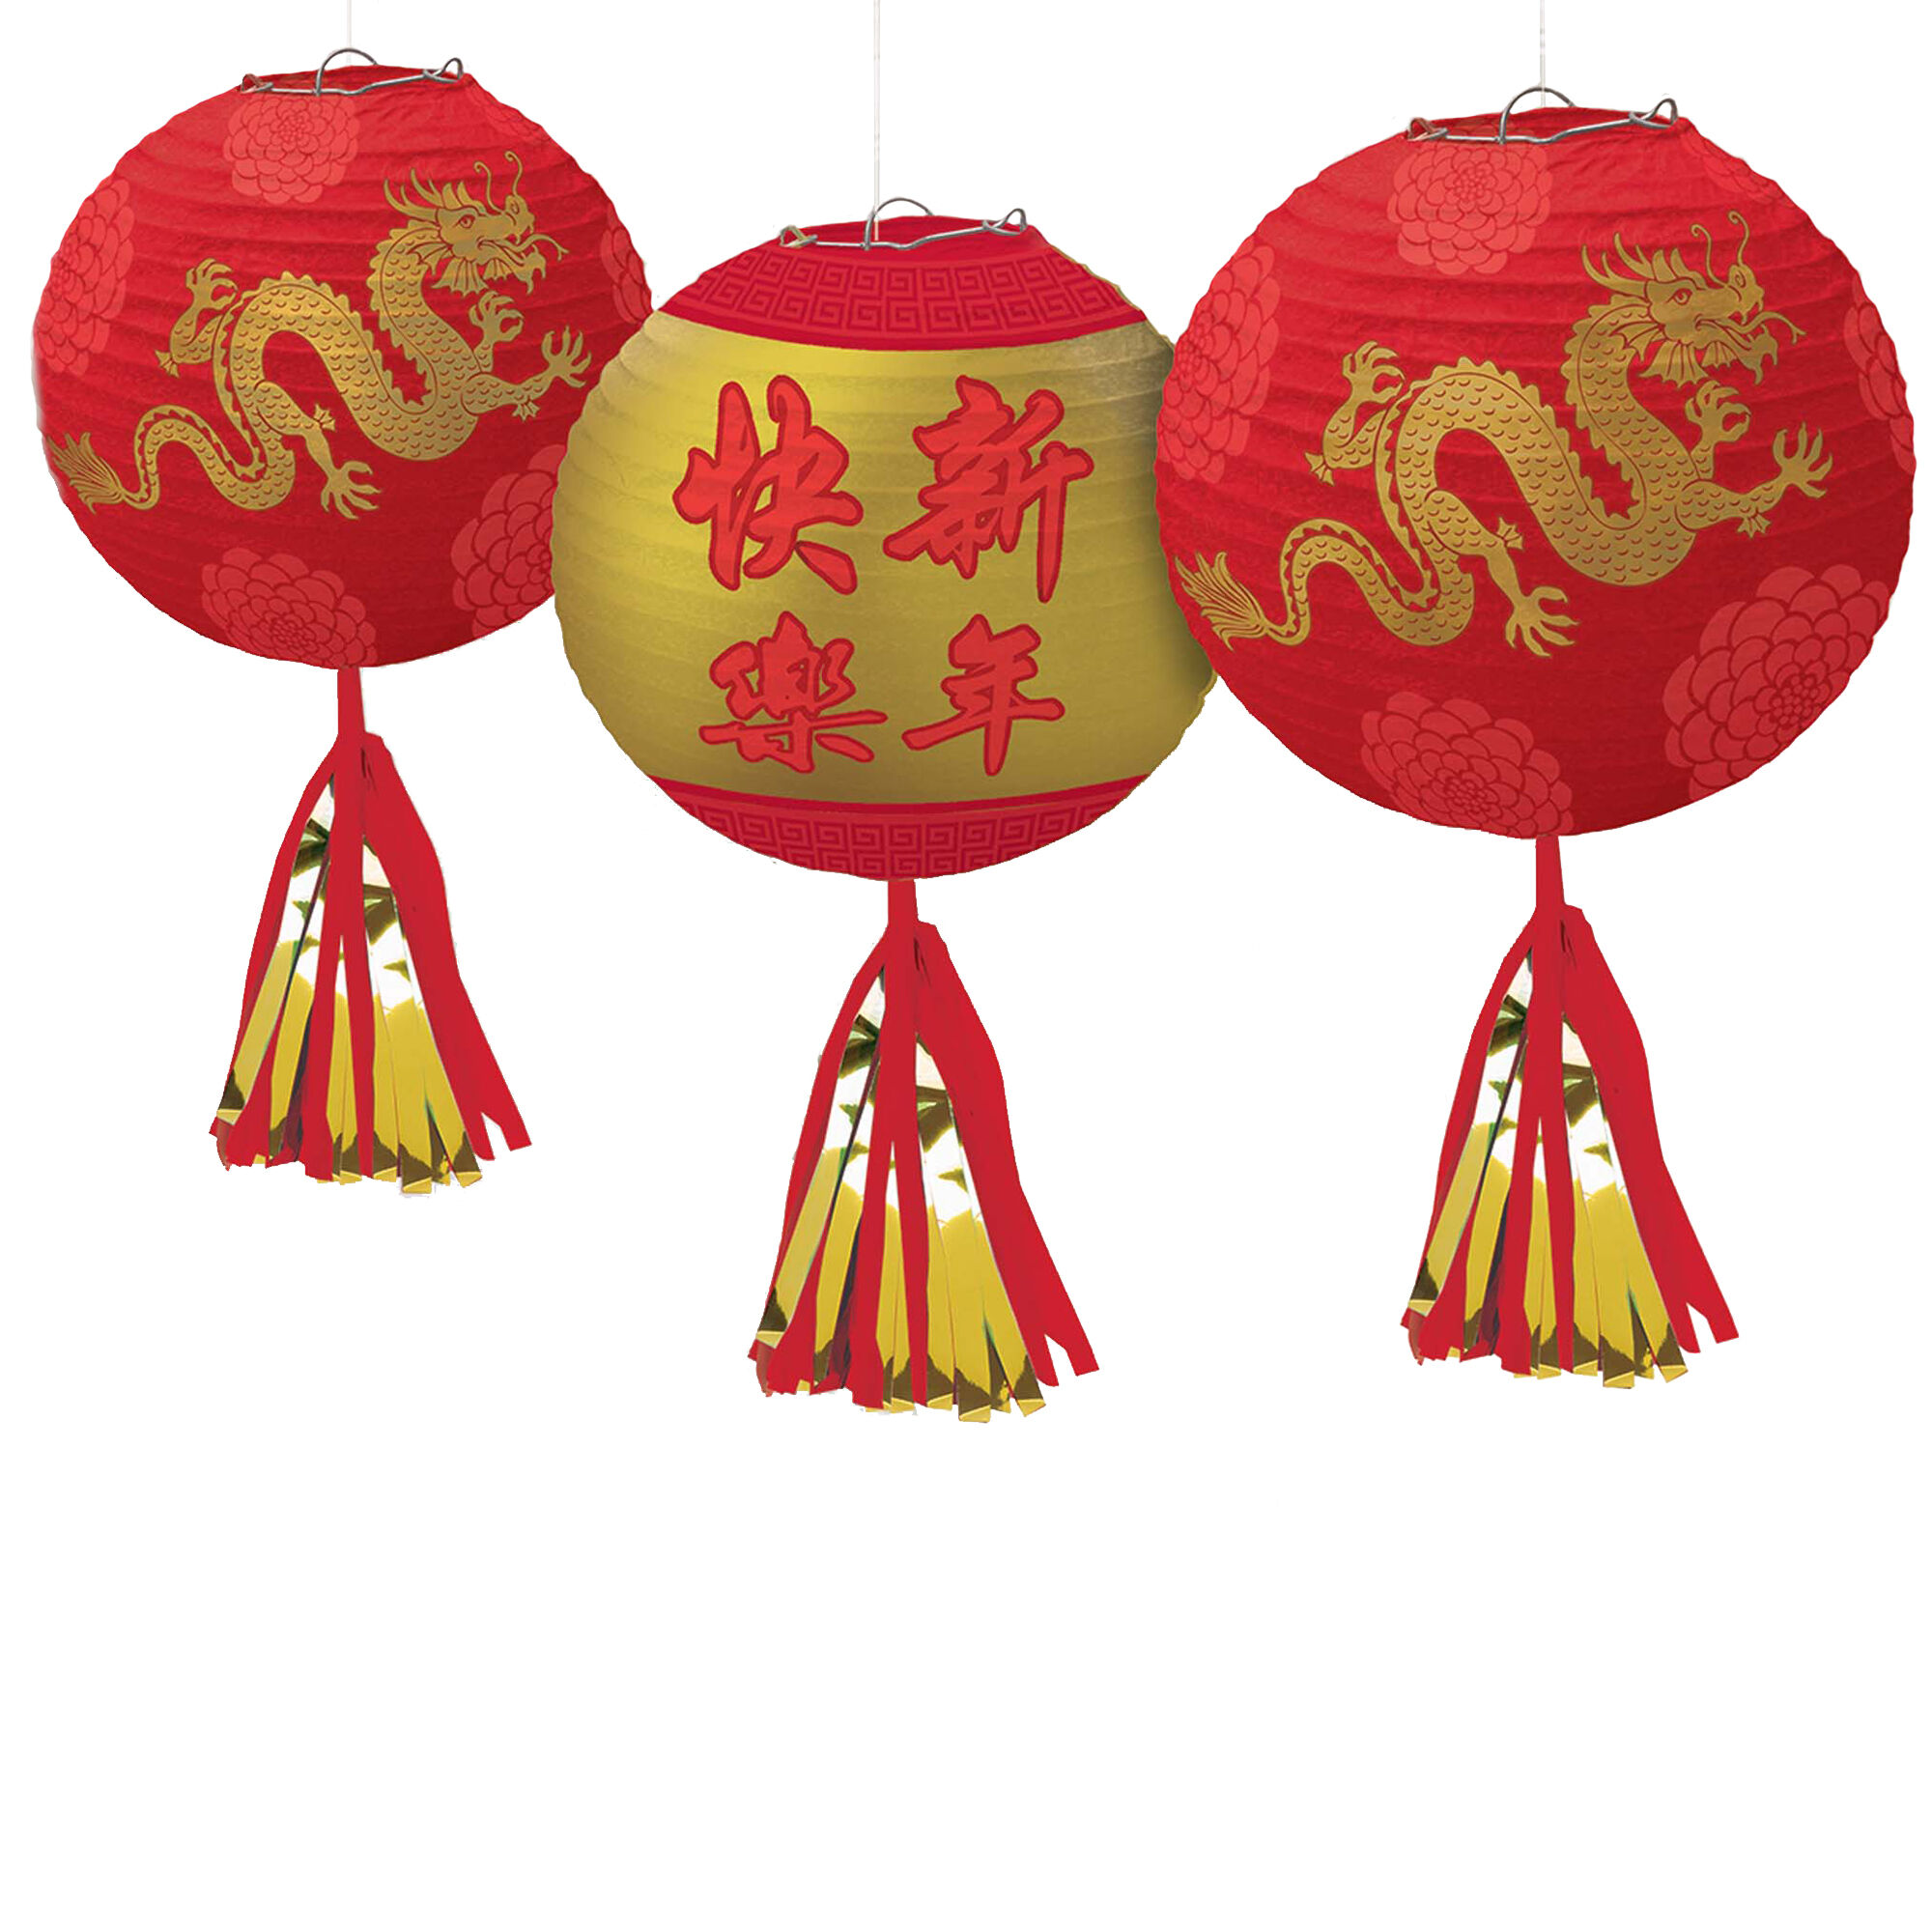 Chinese New Year Lantern Trio by Windy City Novelties